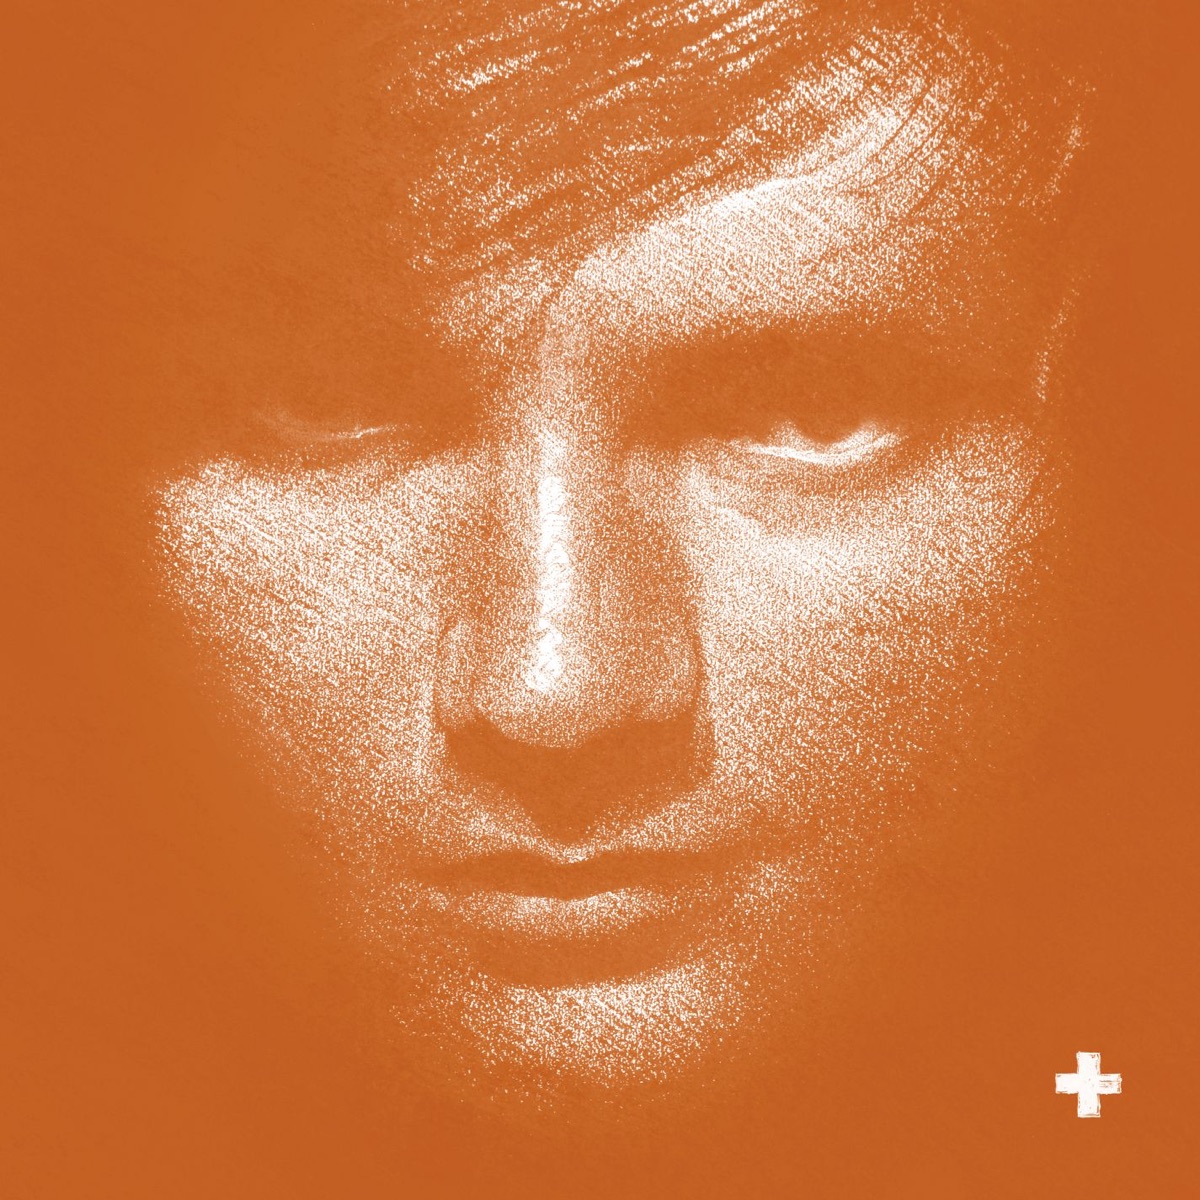 Deluxe Version) - Album by Ed Sheeran - Apple Music